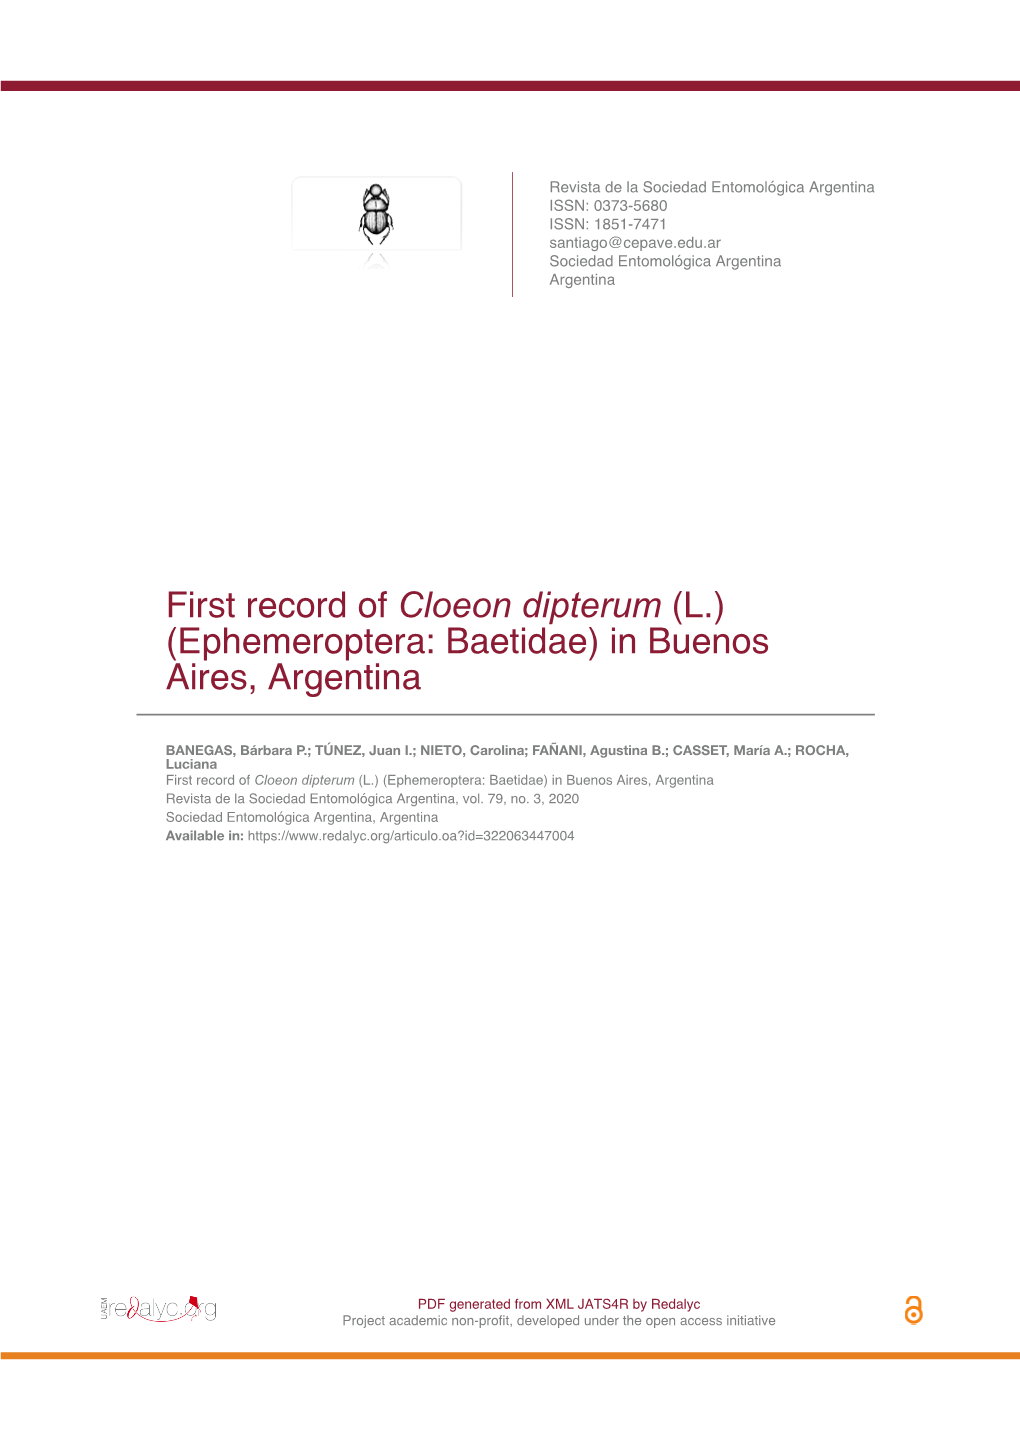 First Record of Cloeon Dipterum (L.) (Ephemeroptera: Baetidae) in Buenos Aires, Argentina